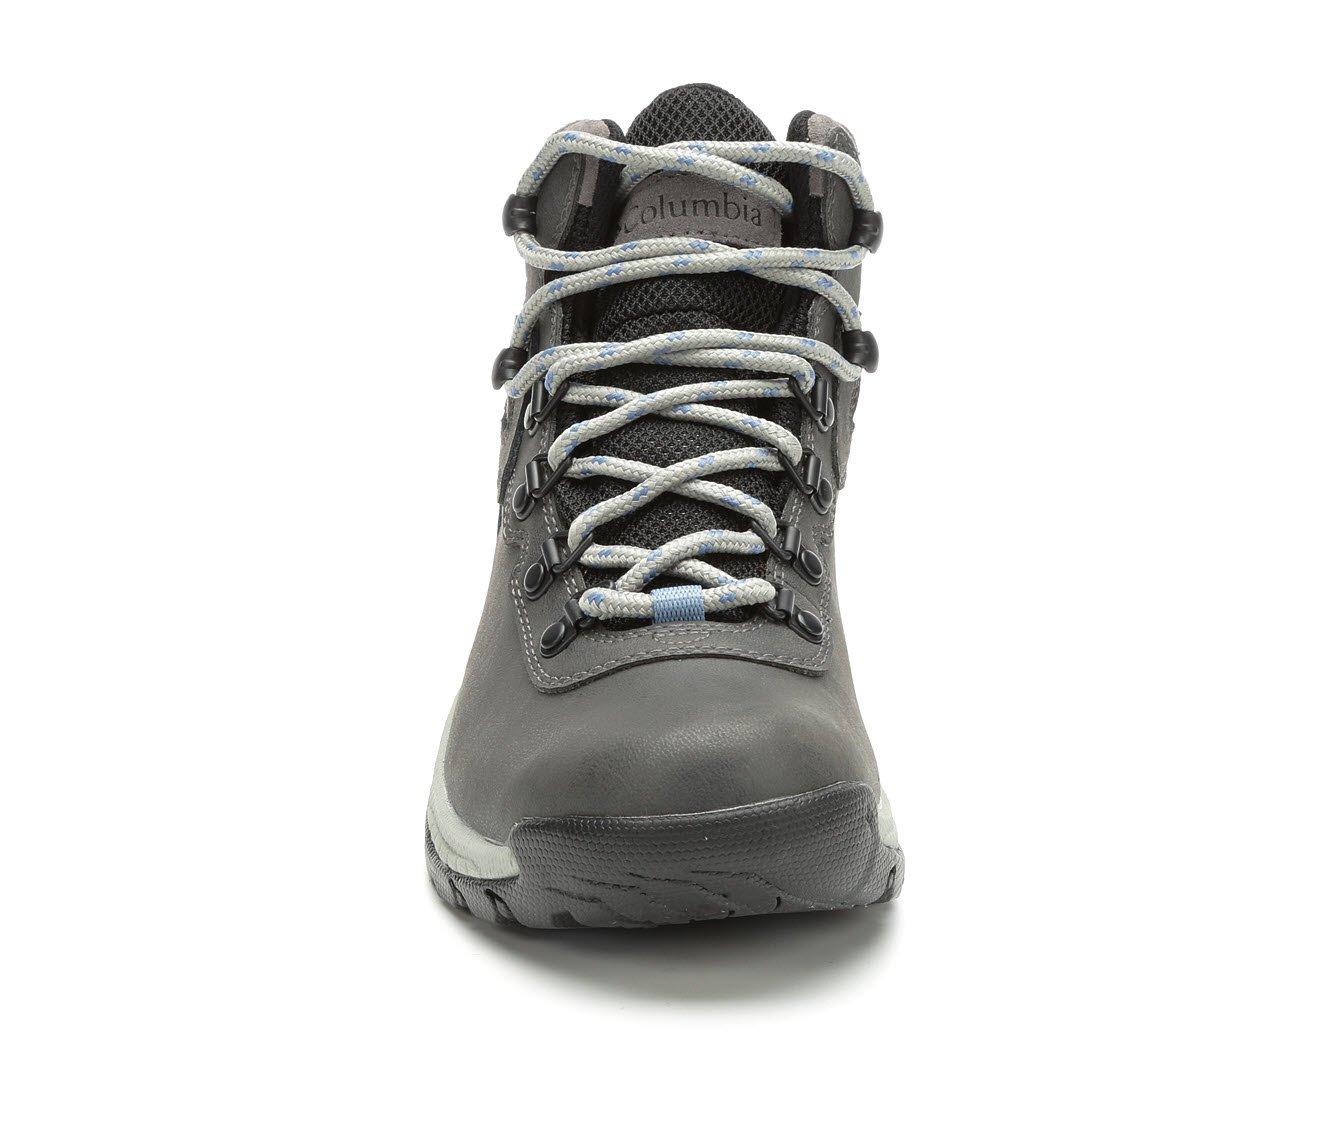 Women's Columbia Newton Ridge Hiking Boots | Shoe Carnival